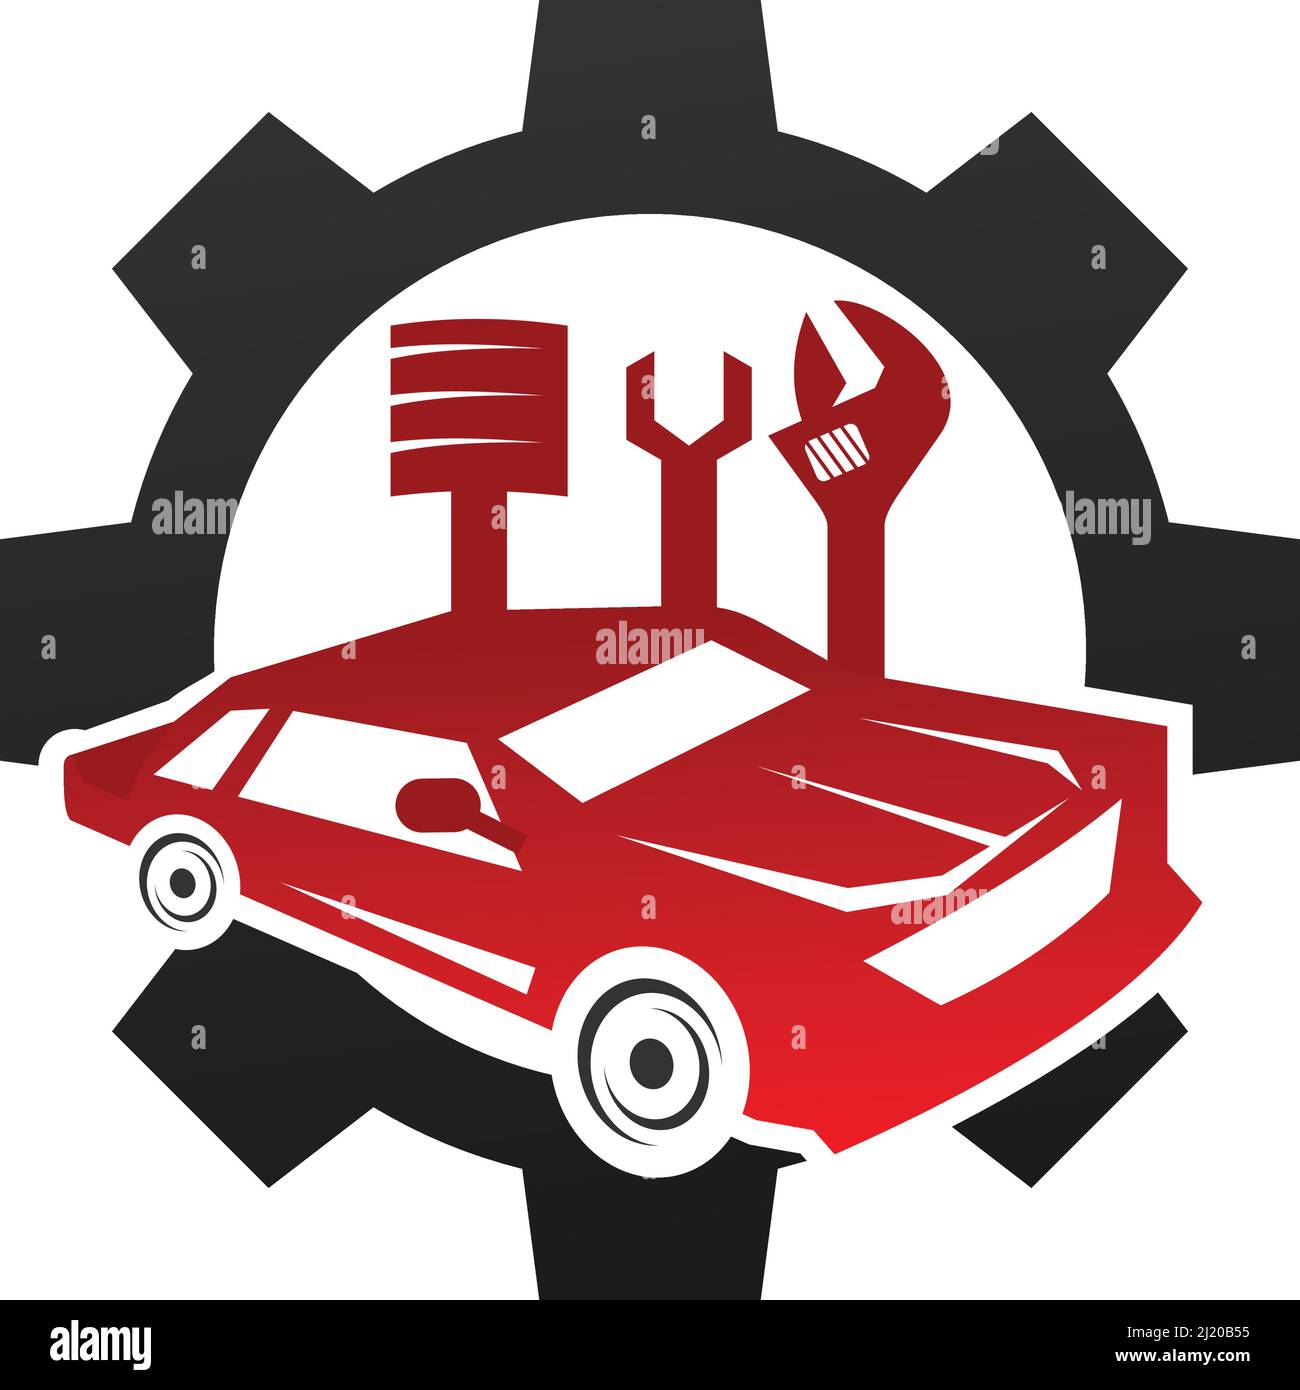 auto repair logo Icon Illustration Brand Identity Stock Vector Image ...